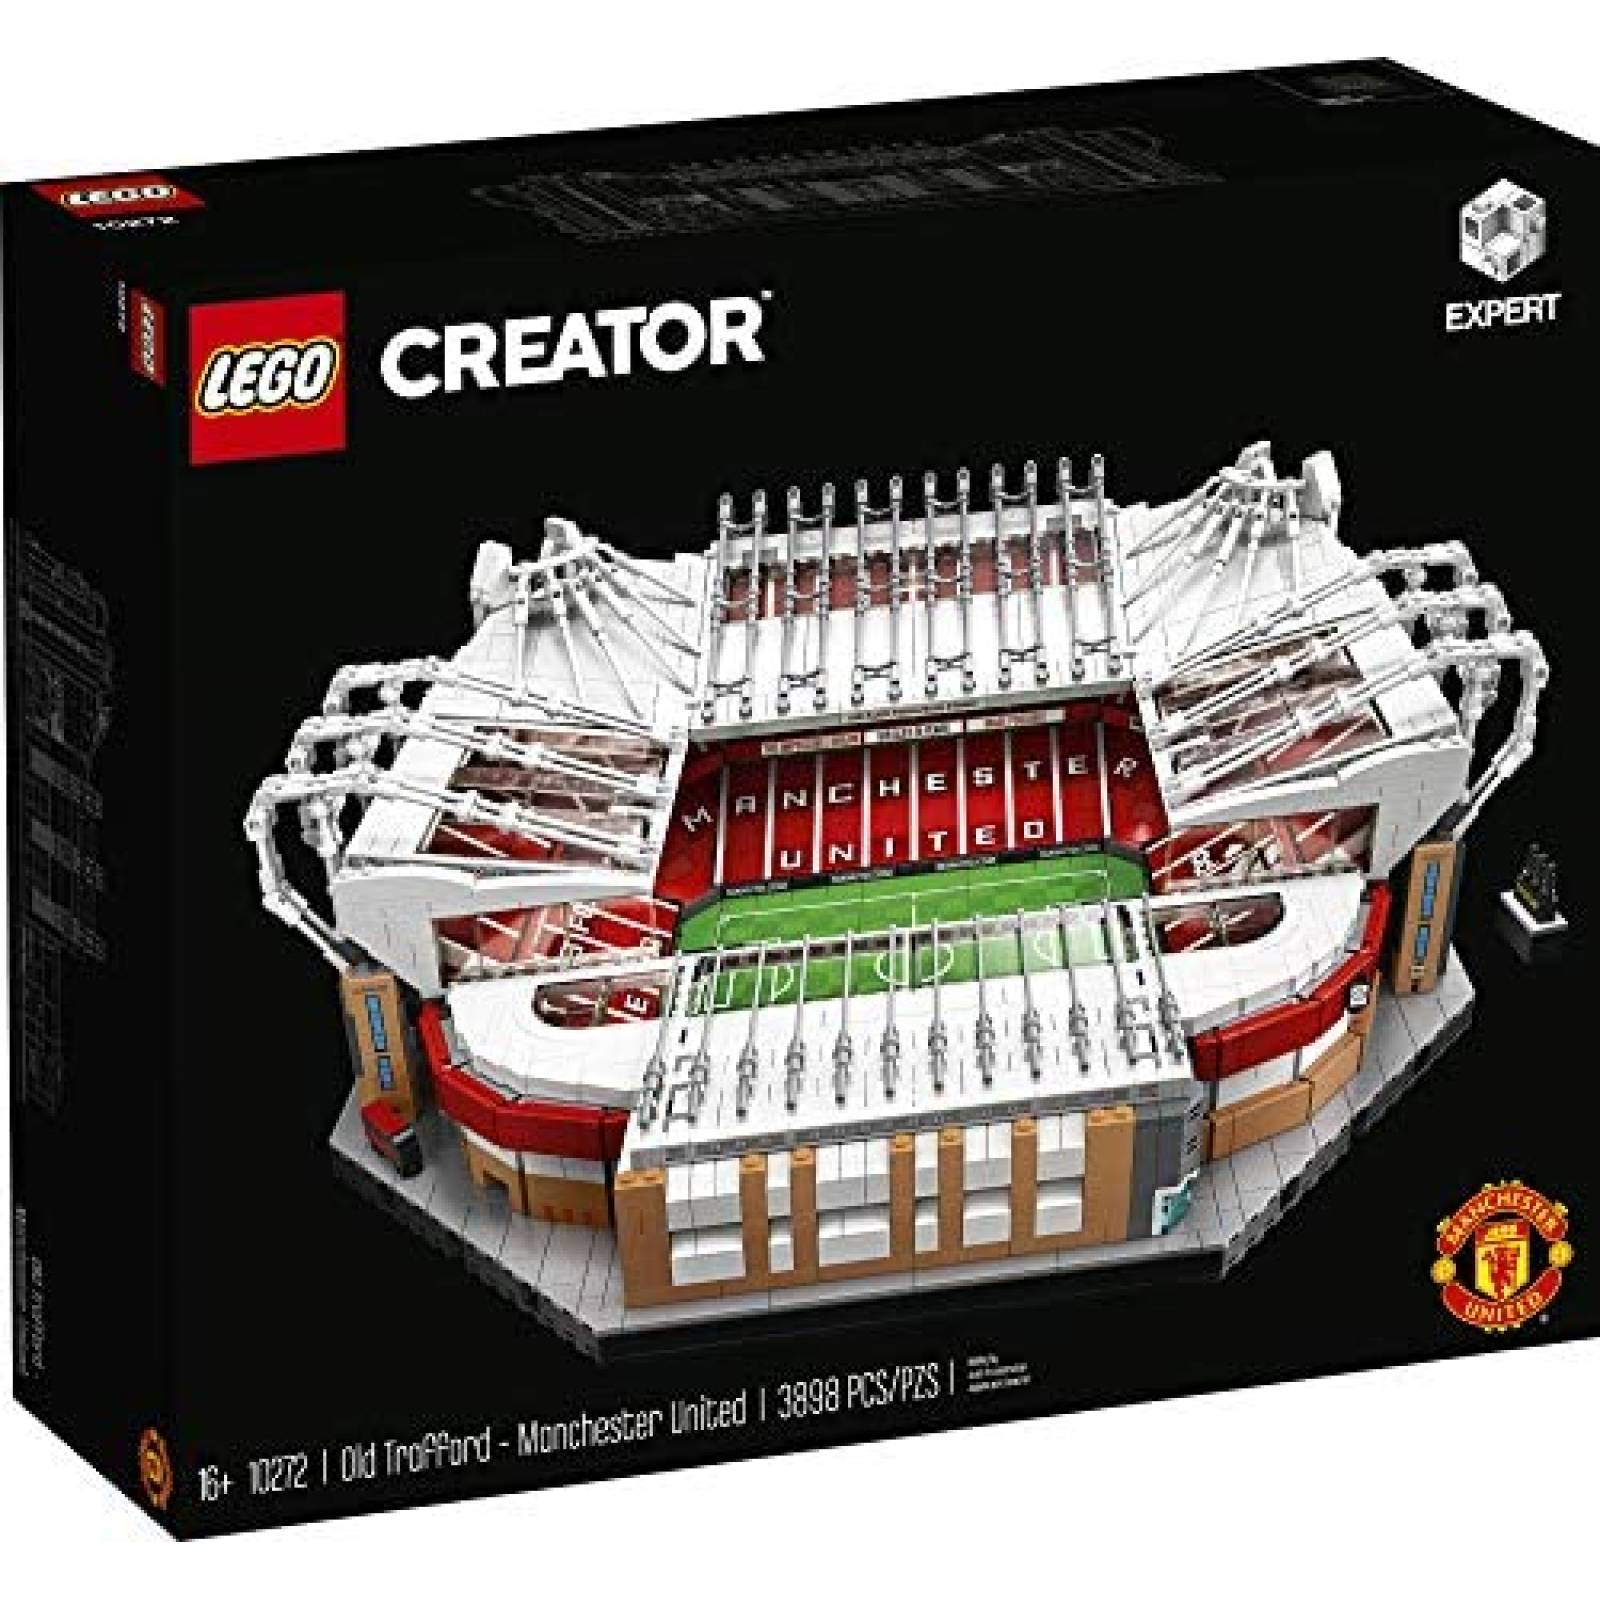 Set de Construcción LEGO Manchester United 3898 Pzs 1:600